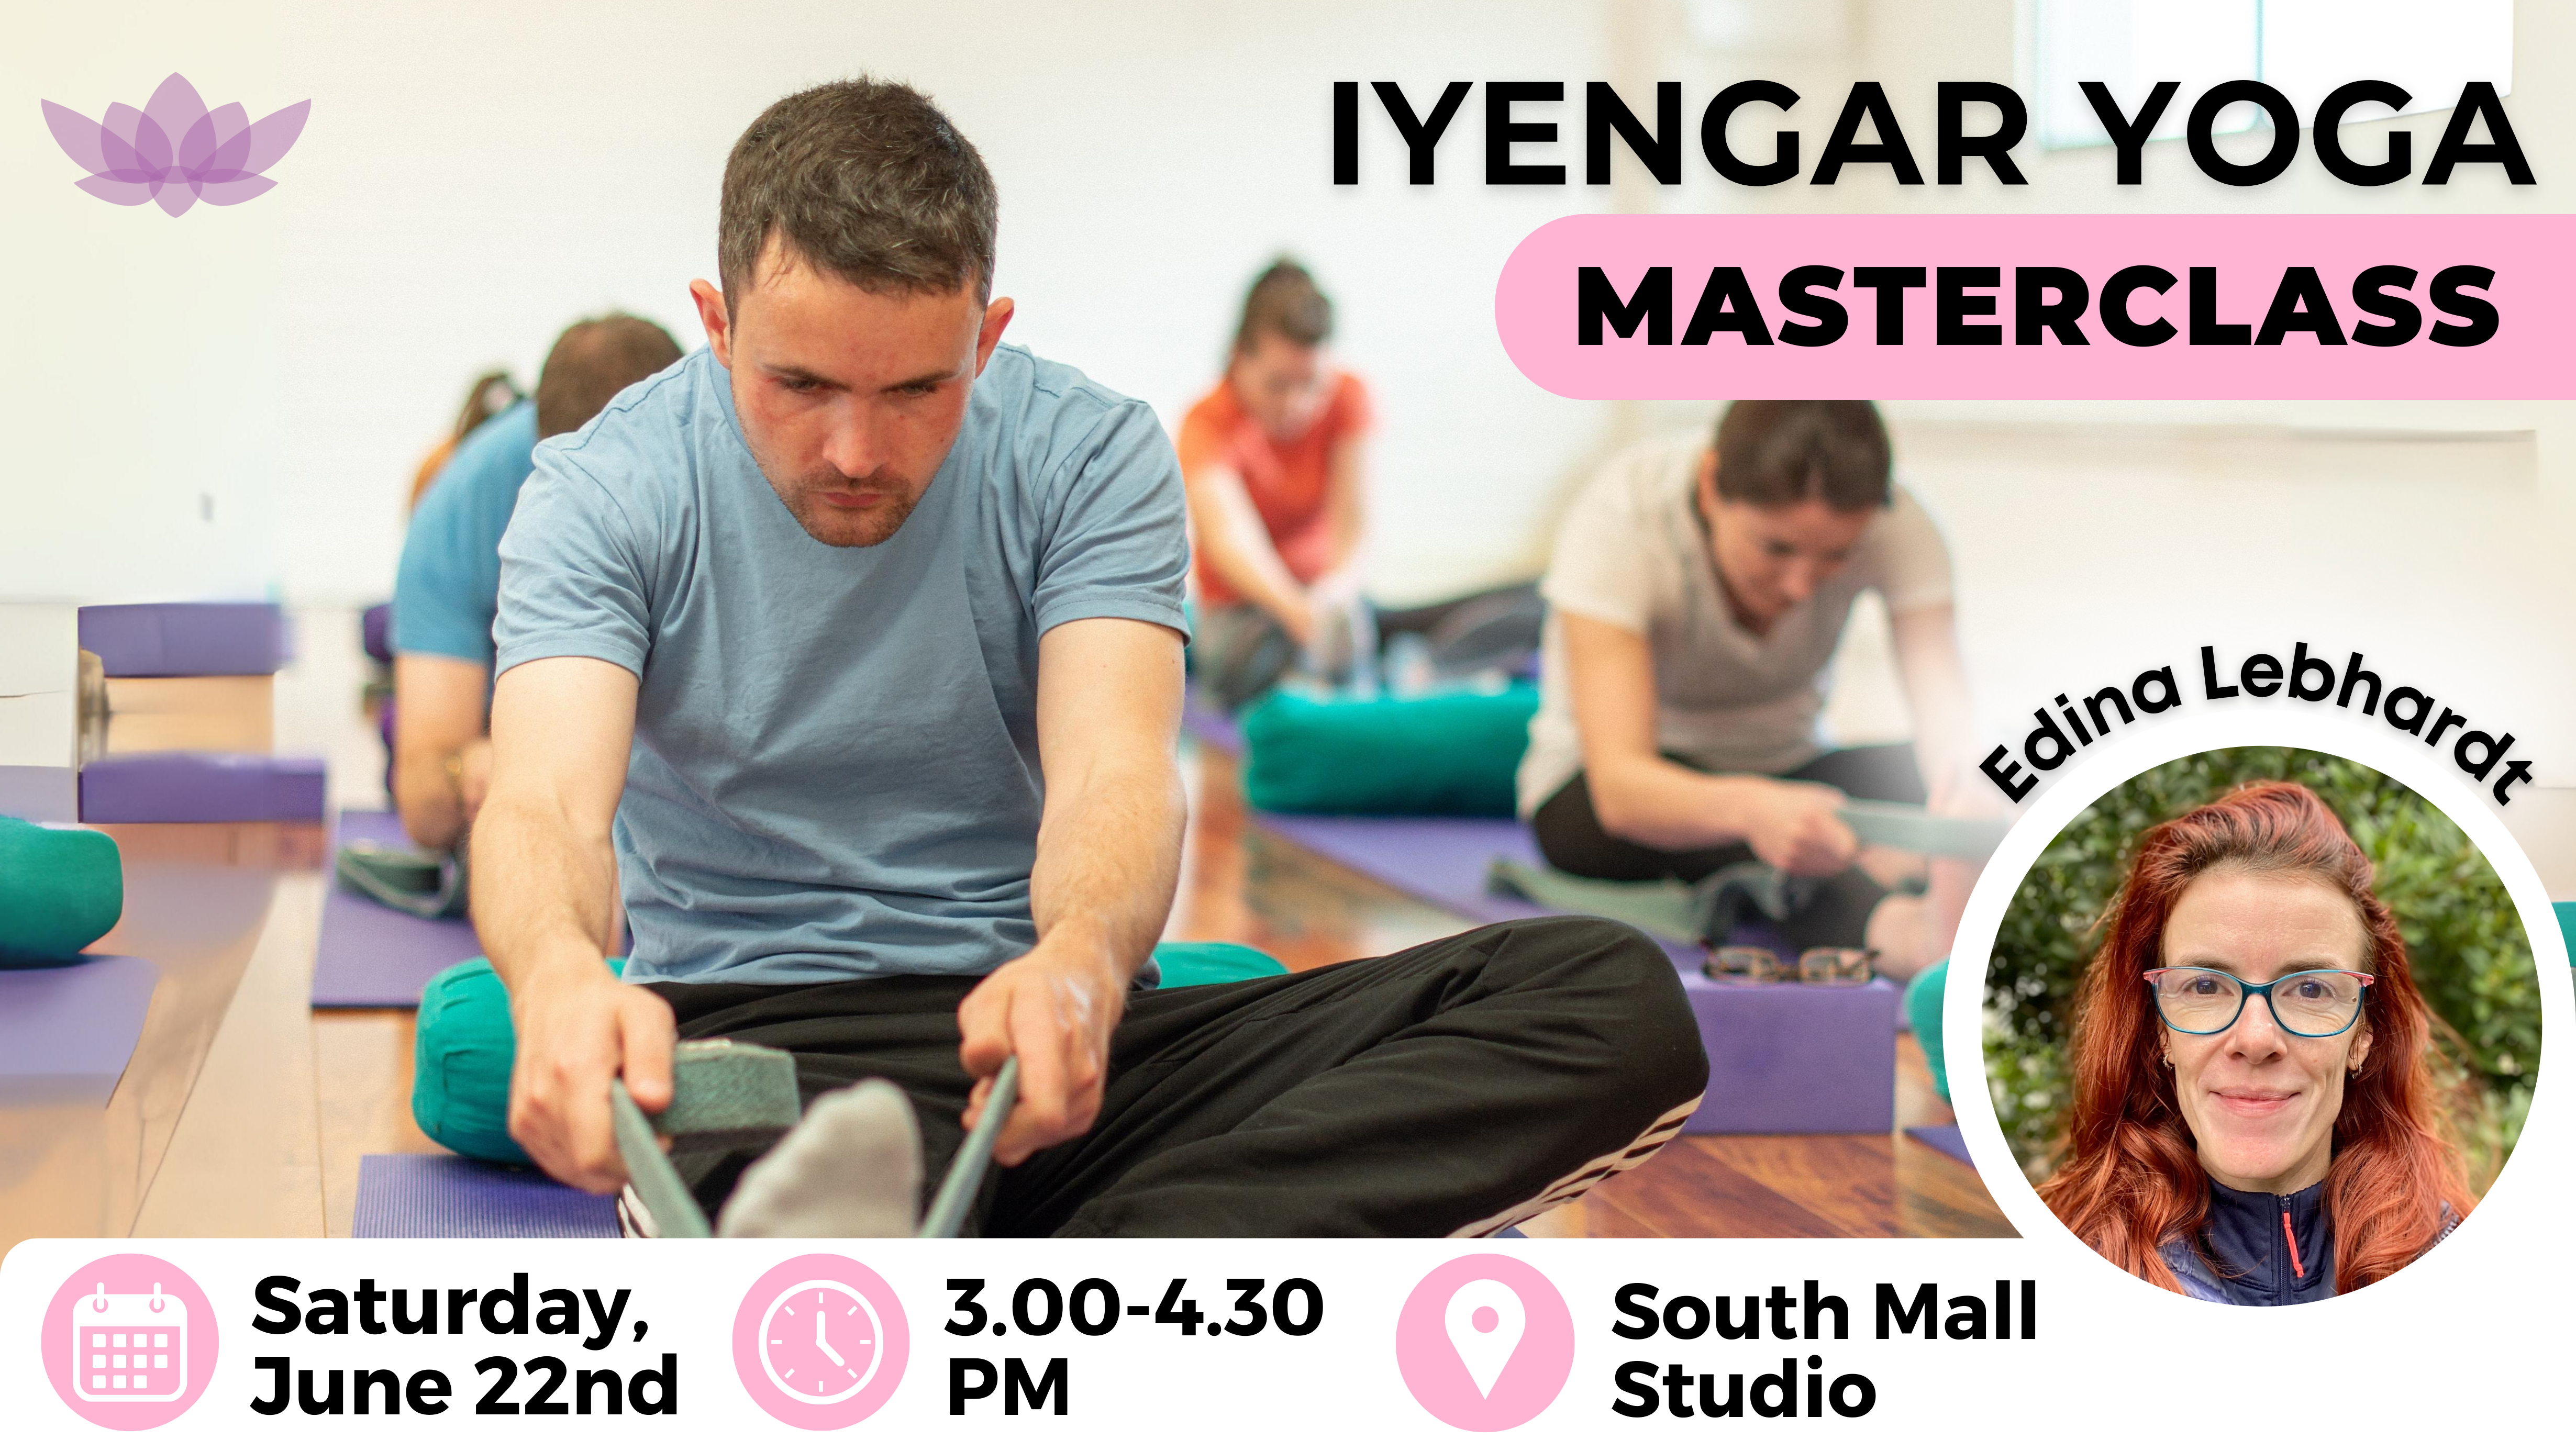 Iyengar Yoga Masterclass - yoga in Cork